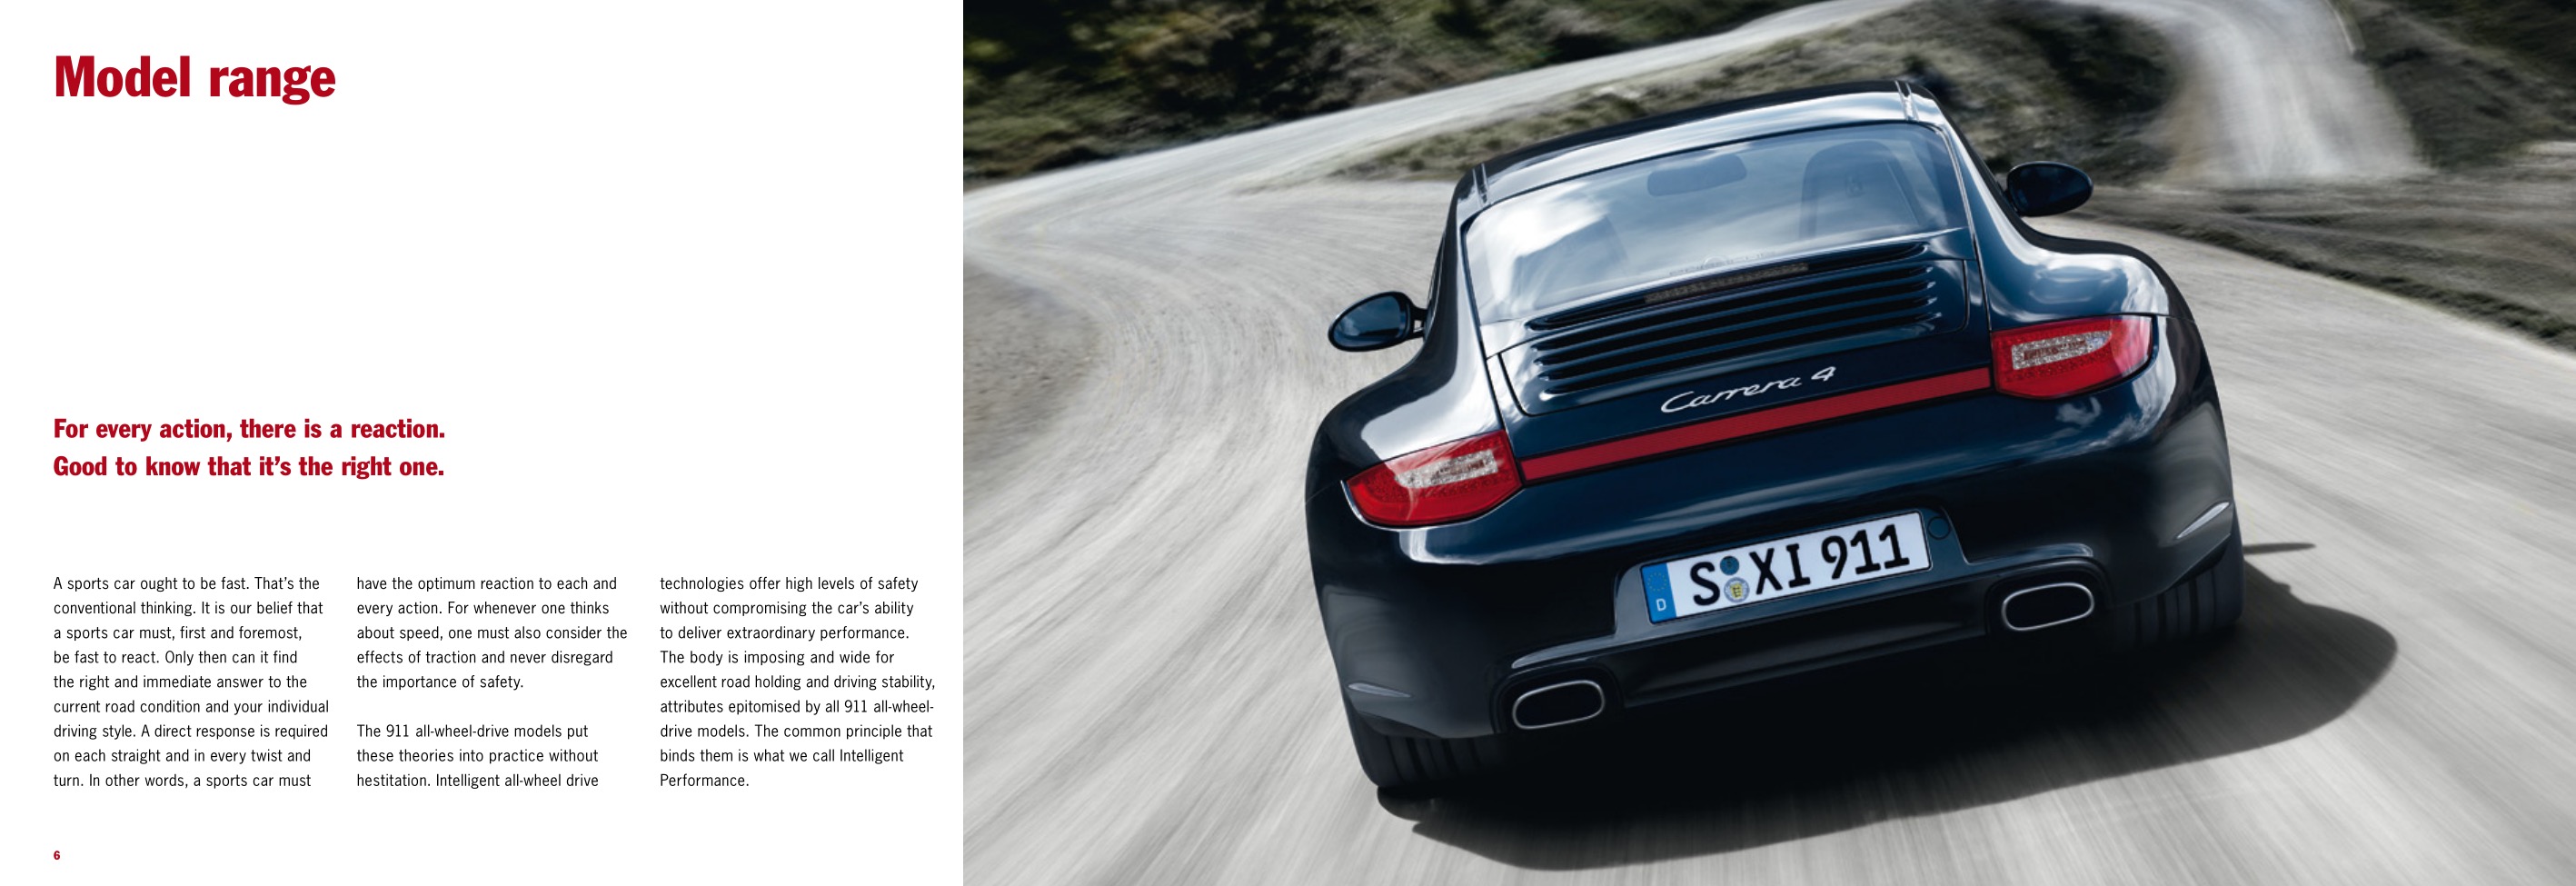 2012 Porsche 911 997 Brochure Page 25